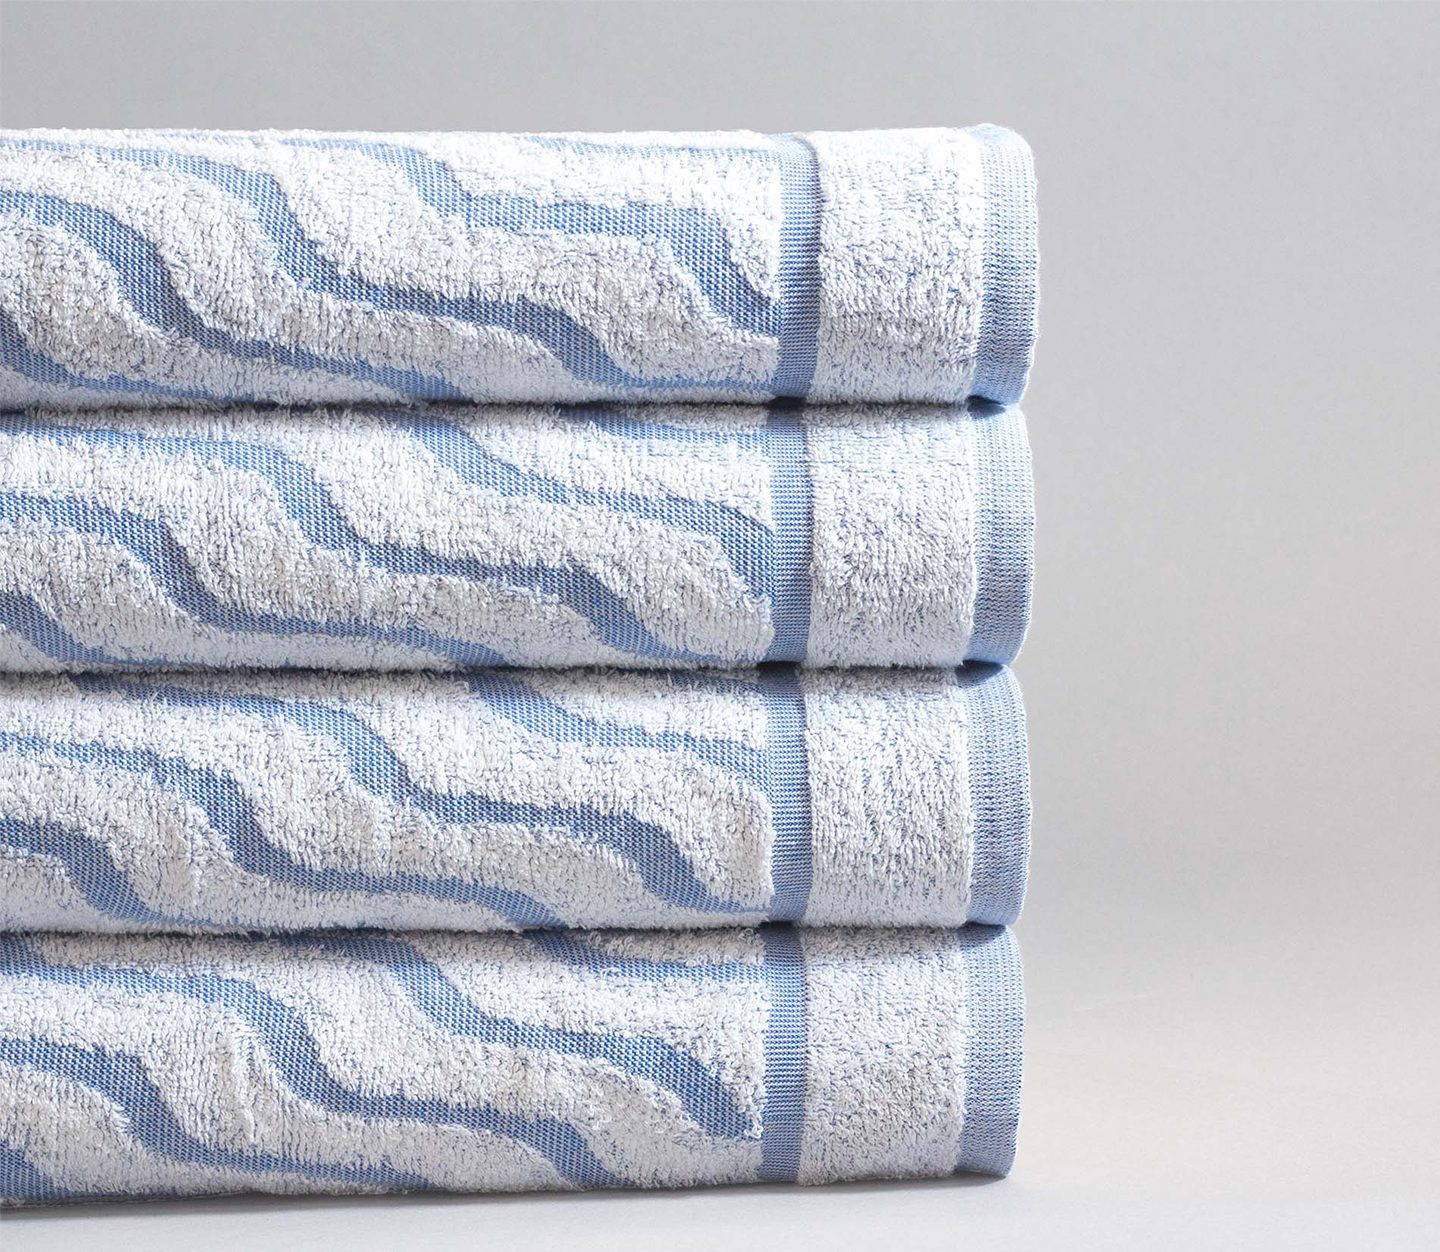 Wholesale Towels Manufacturer & Bulk Supplier - Oasis Towels